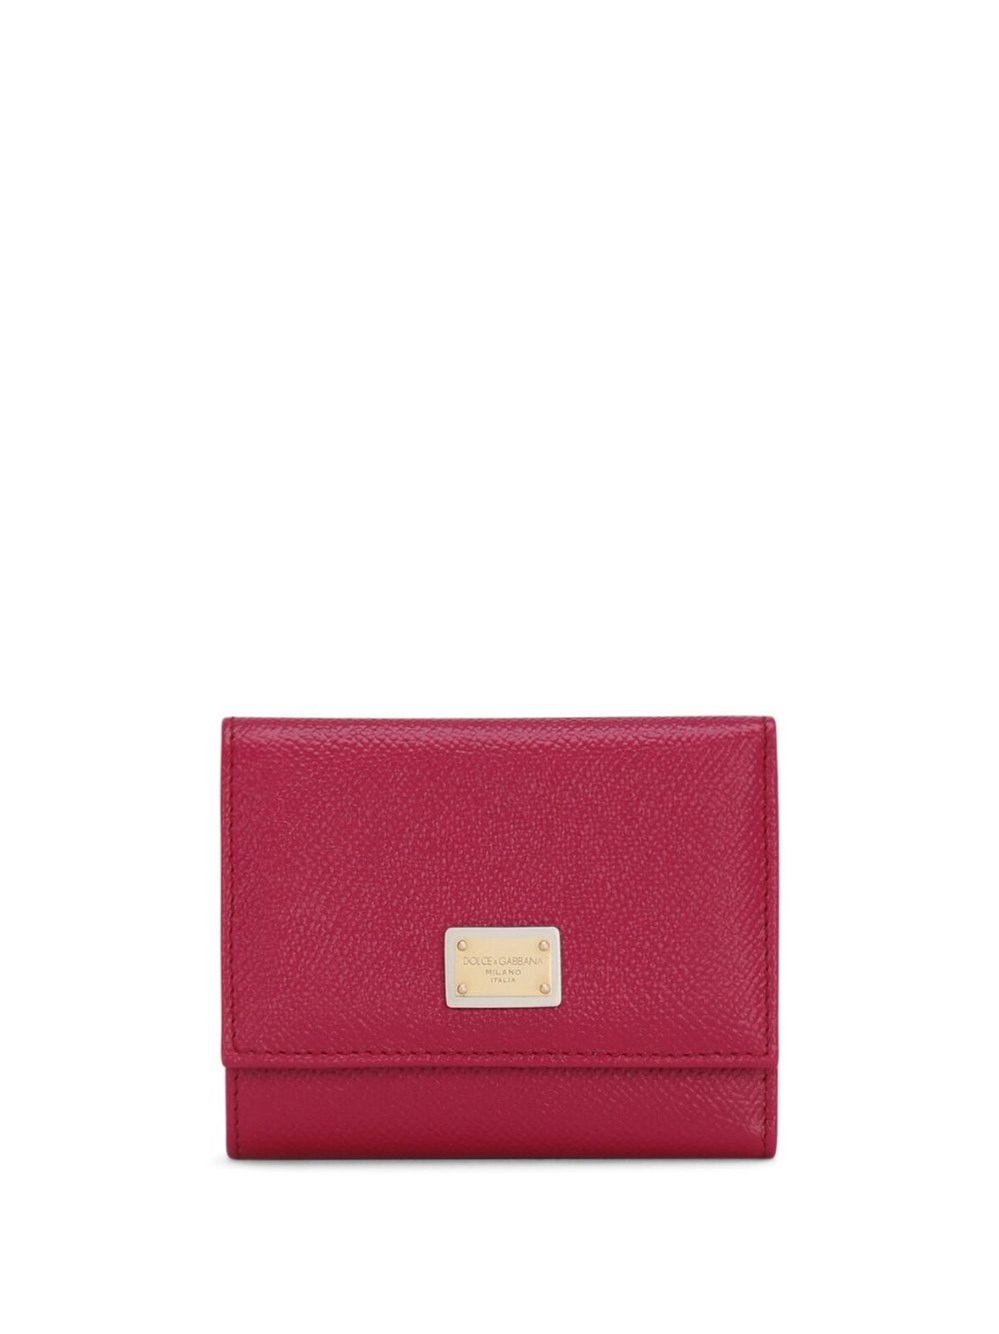 Dolce & Gabbana Dauphine Wallet In Red